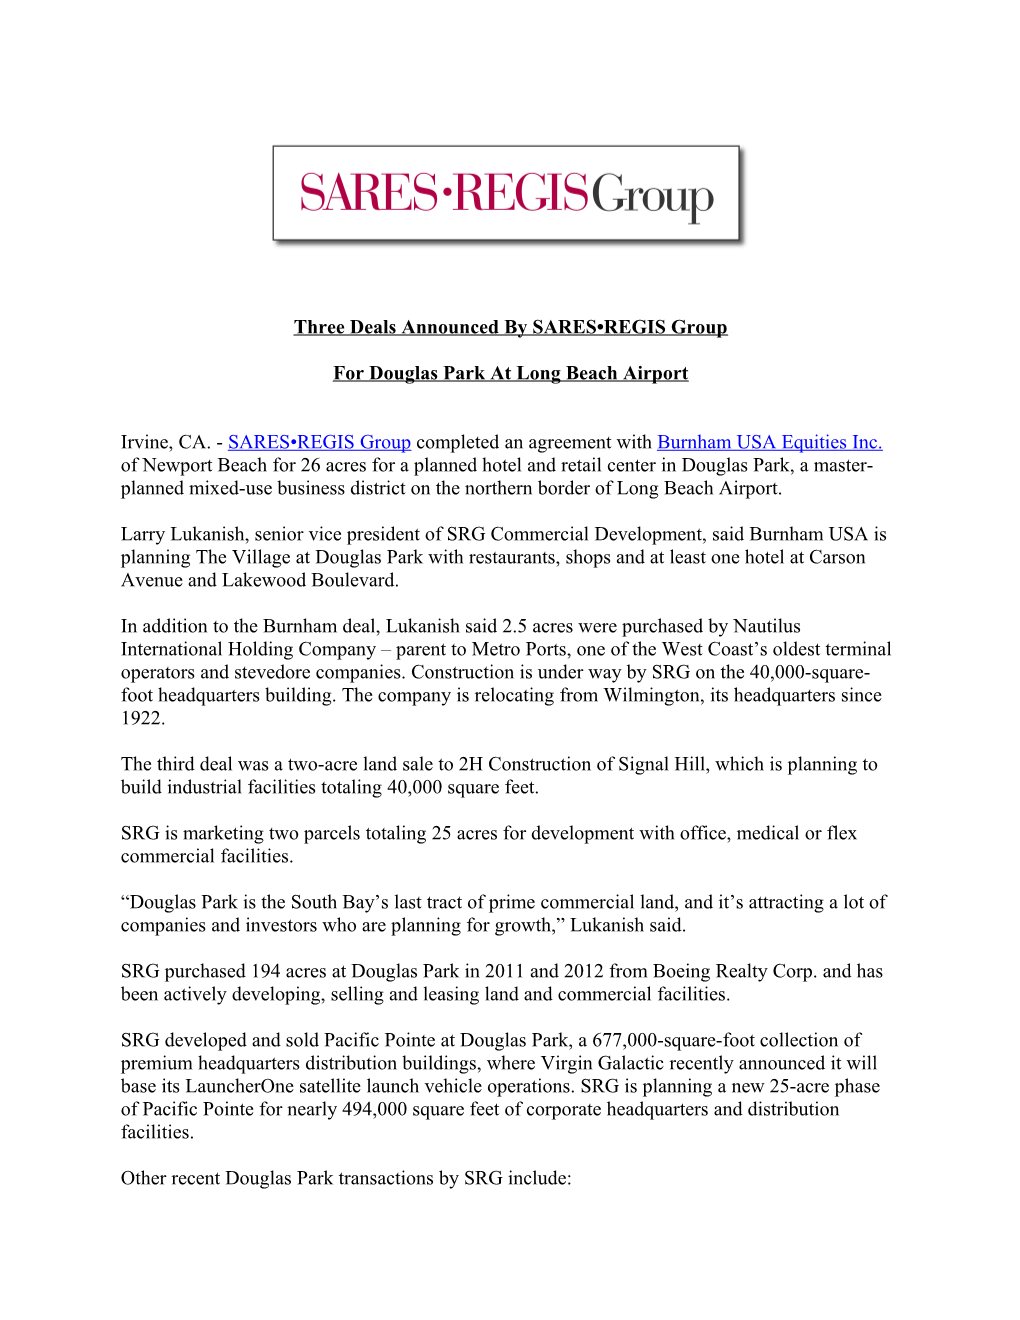 Three Deals Announced by SARES REGIS Group